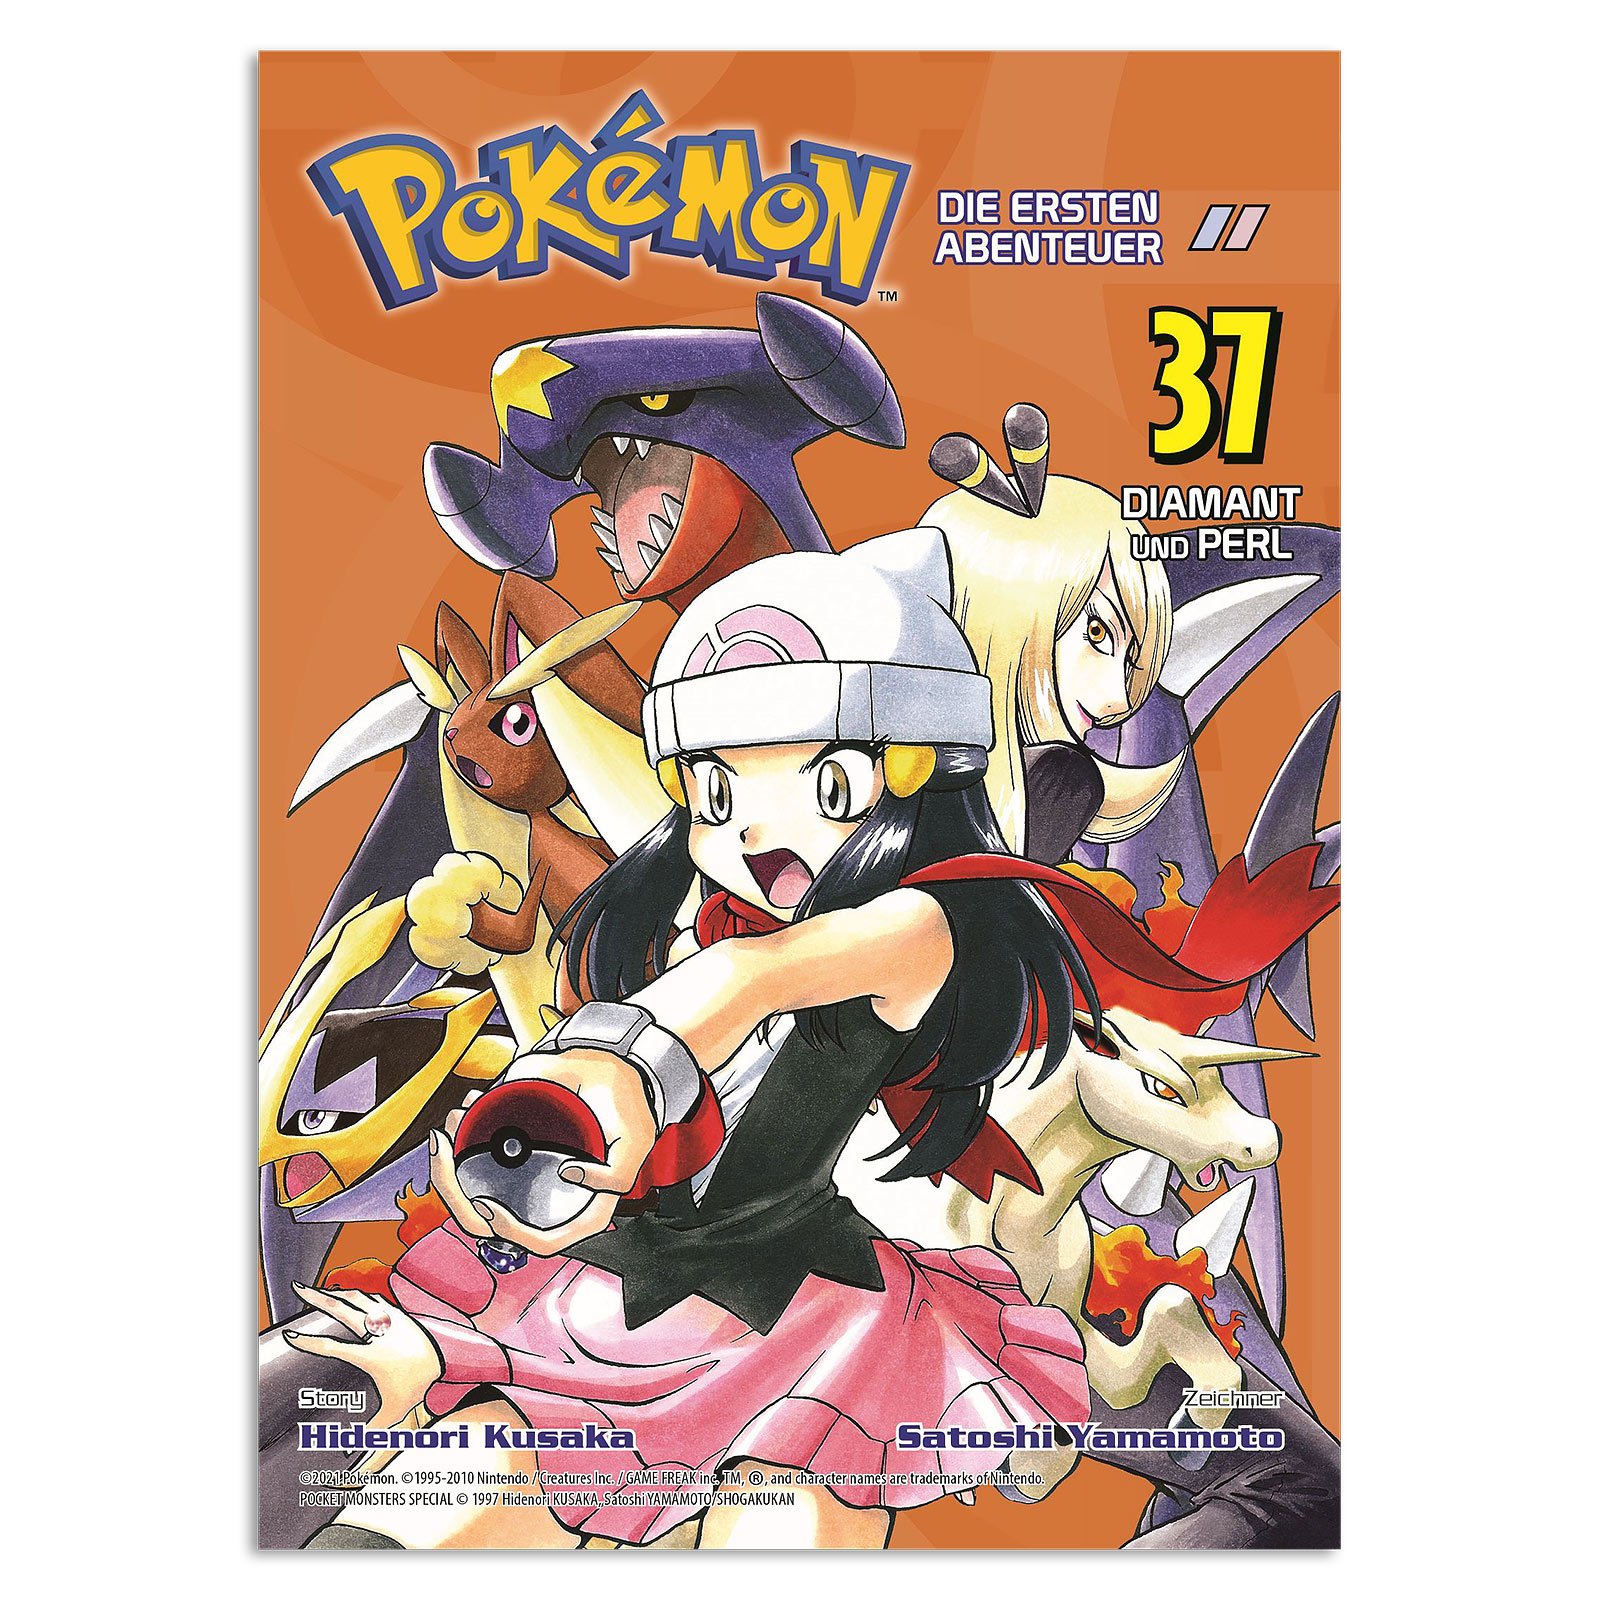 Pokémon - The First Adventures Volume 37 Paperbacks